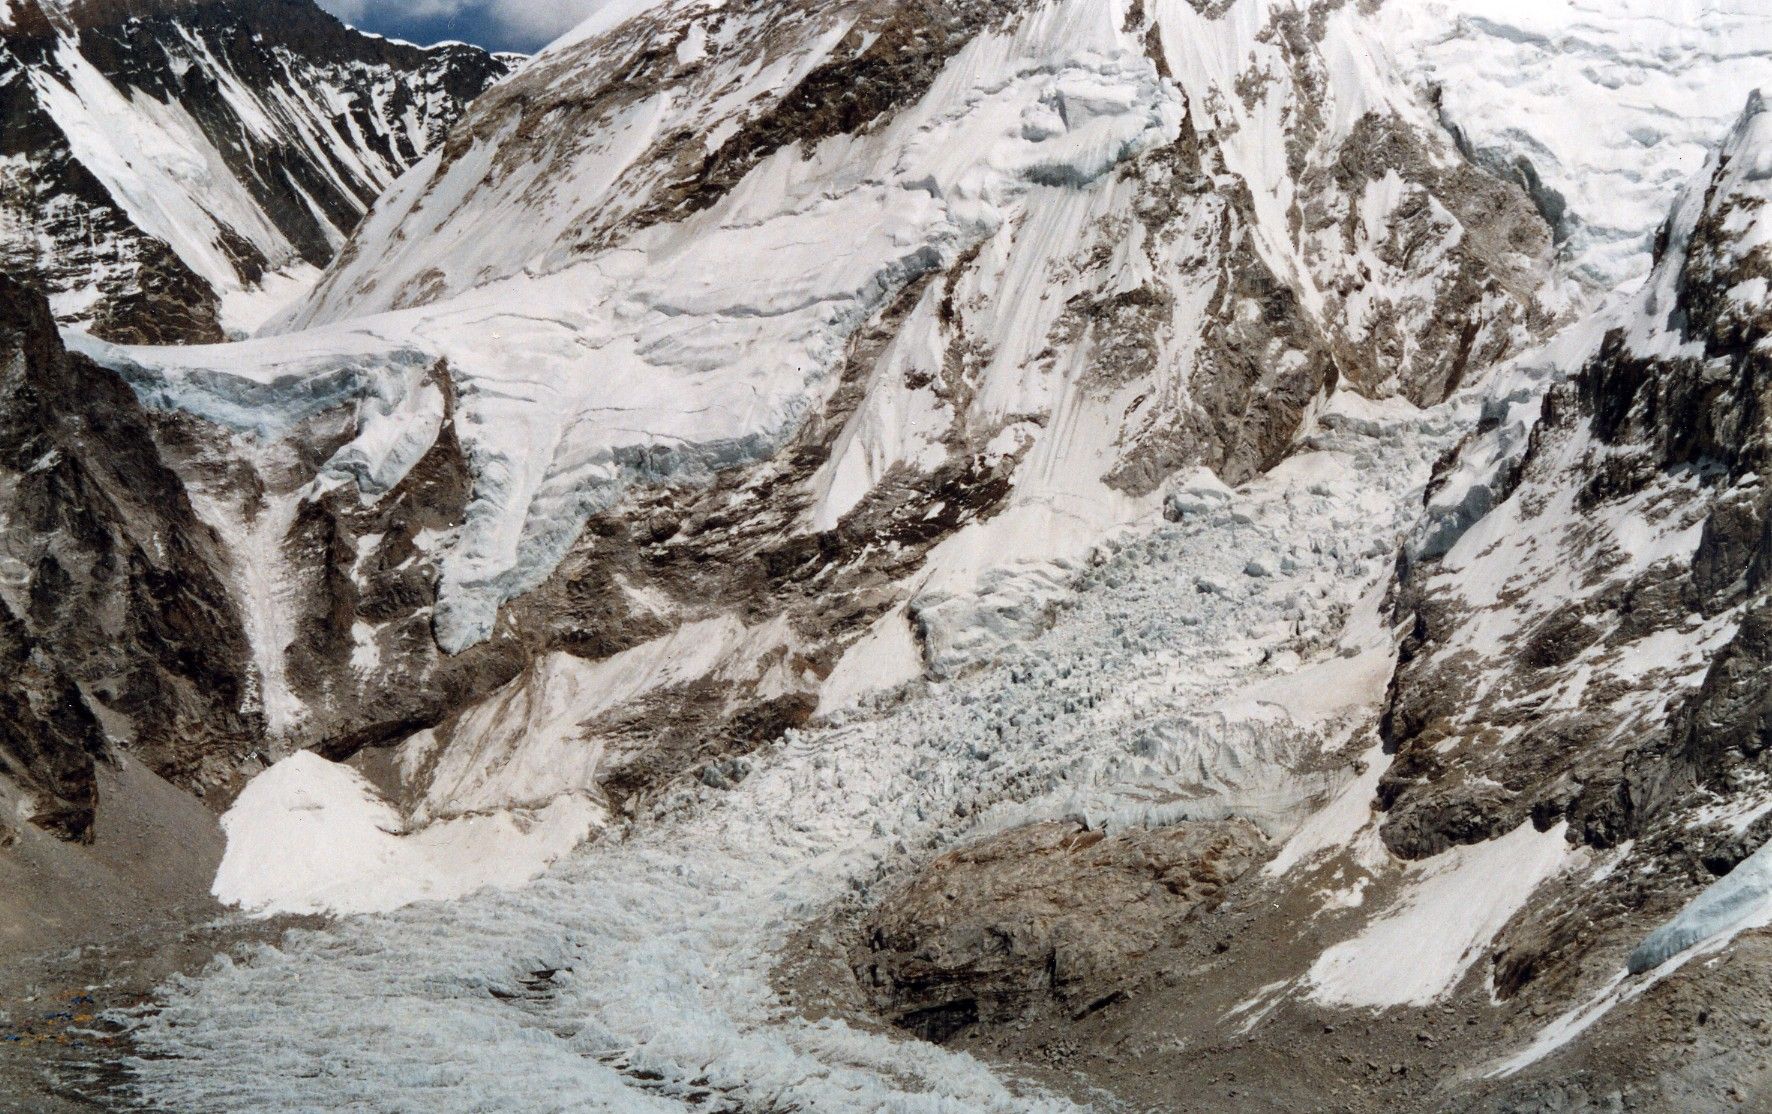 Lho La above Everest Base Camp on Khumbu Glacier